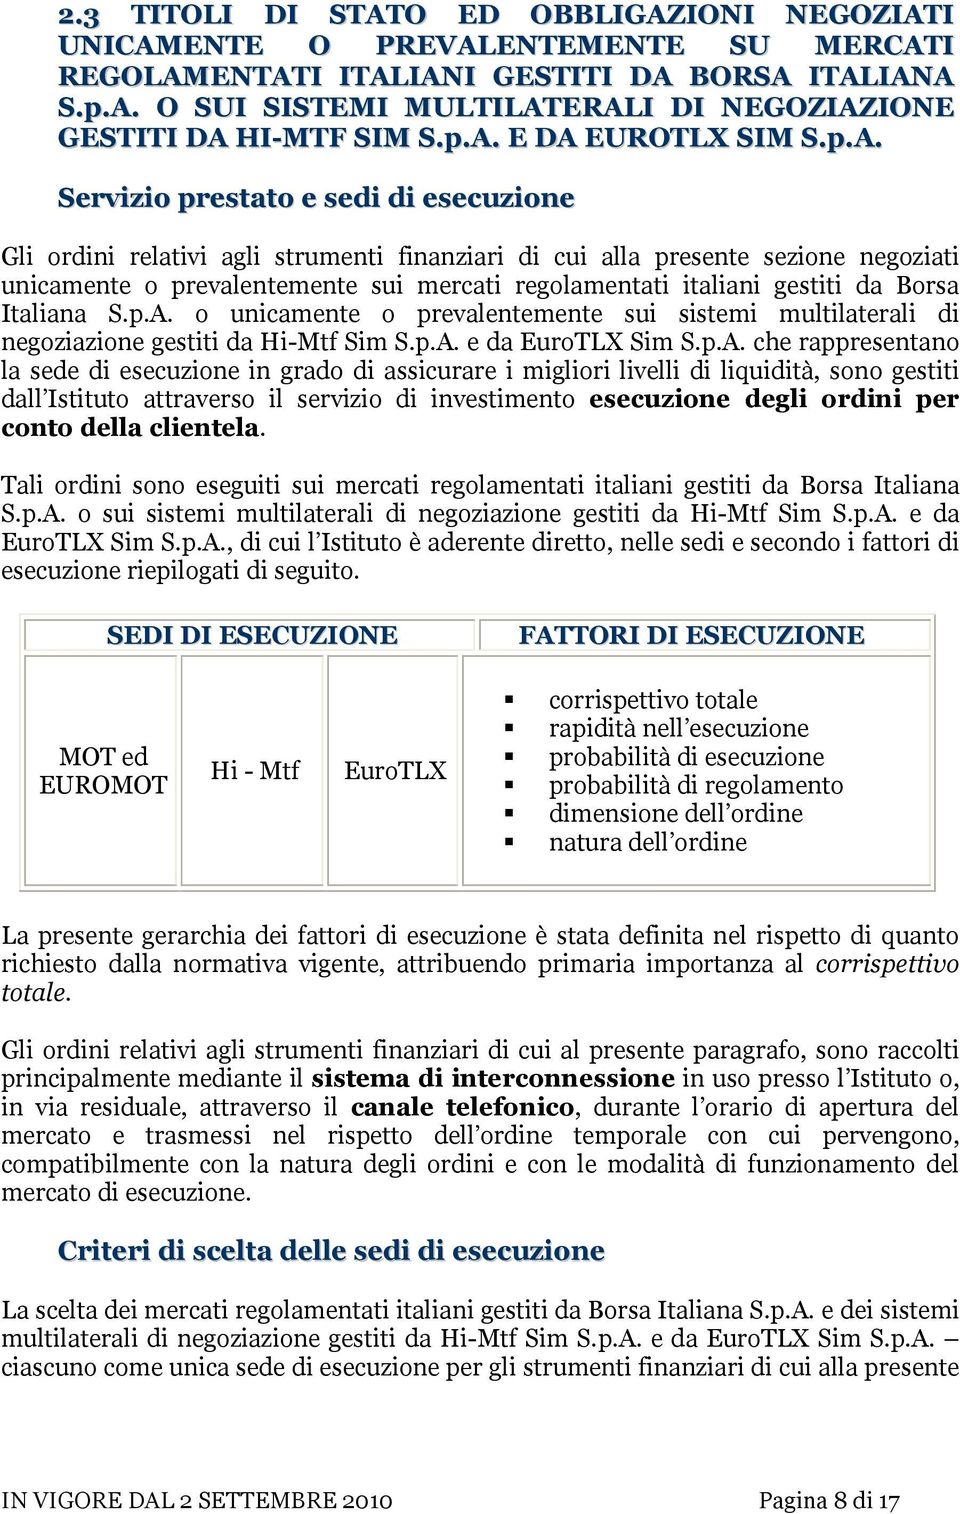 regolamentati italiani gestiti da Borsa Italiana S.p.A.